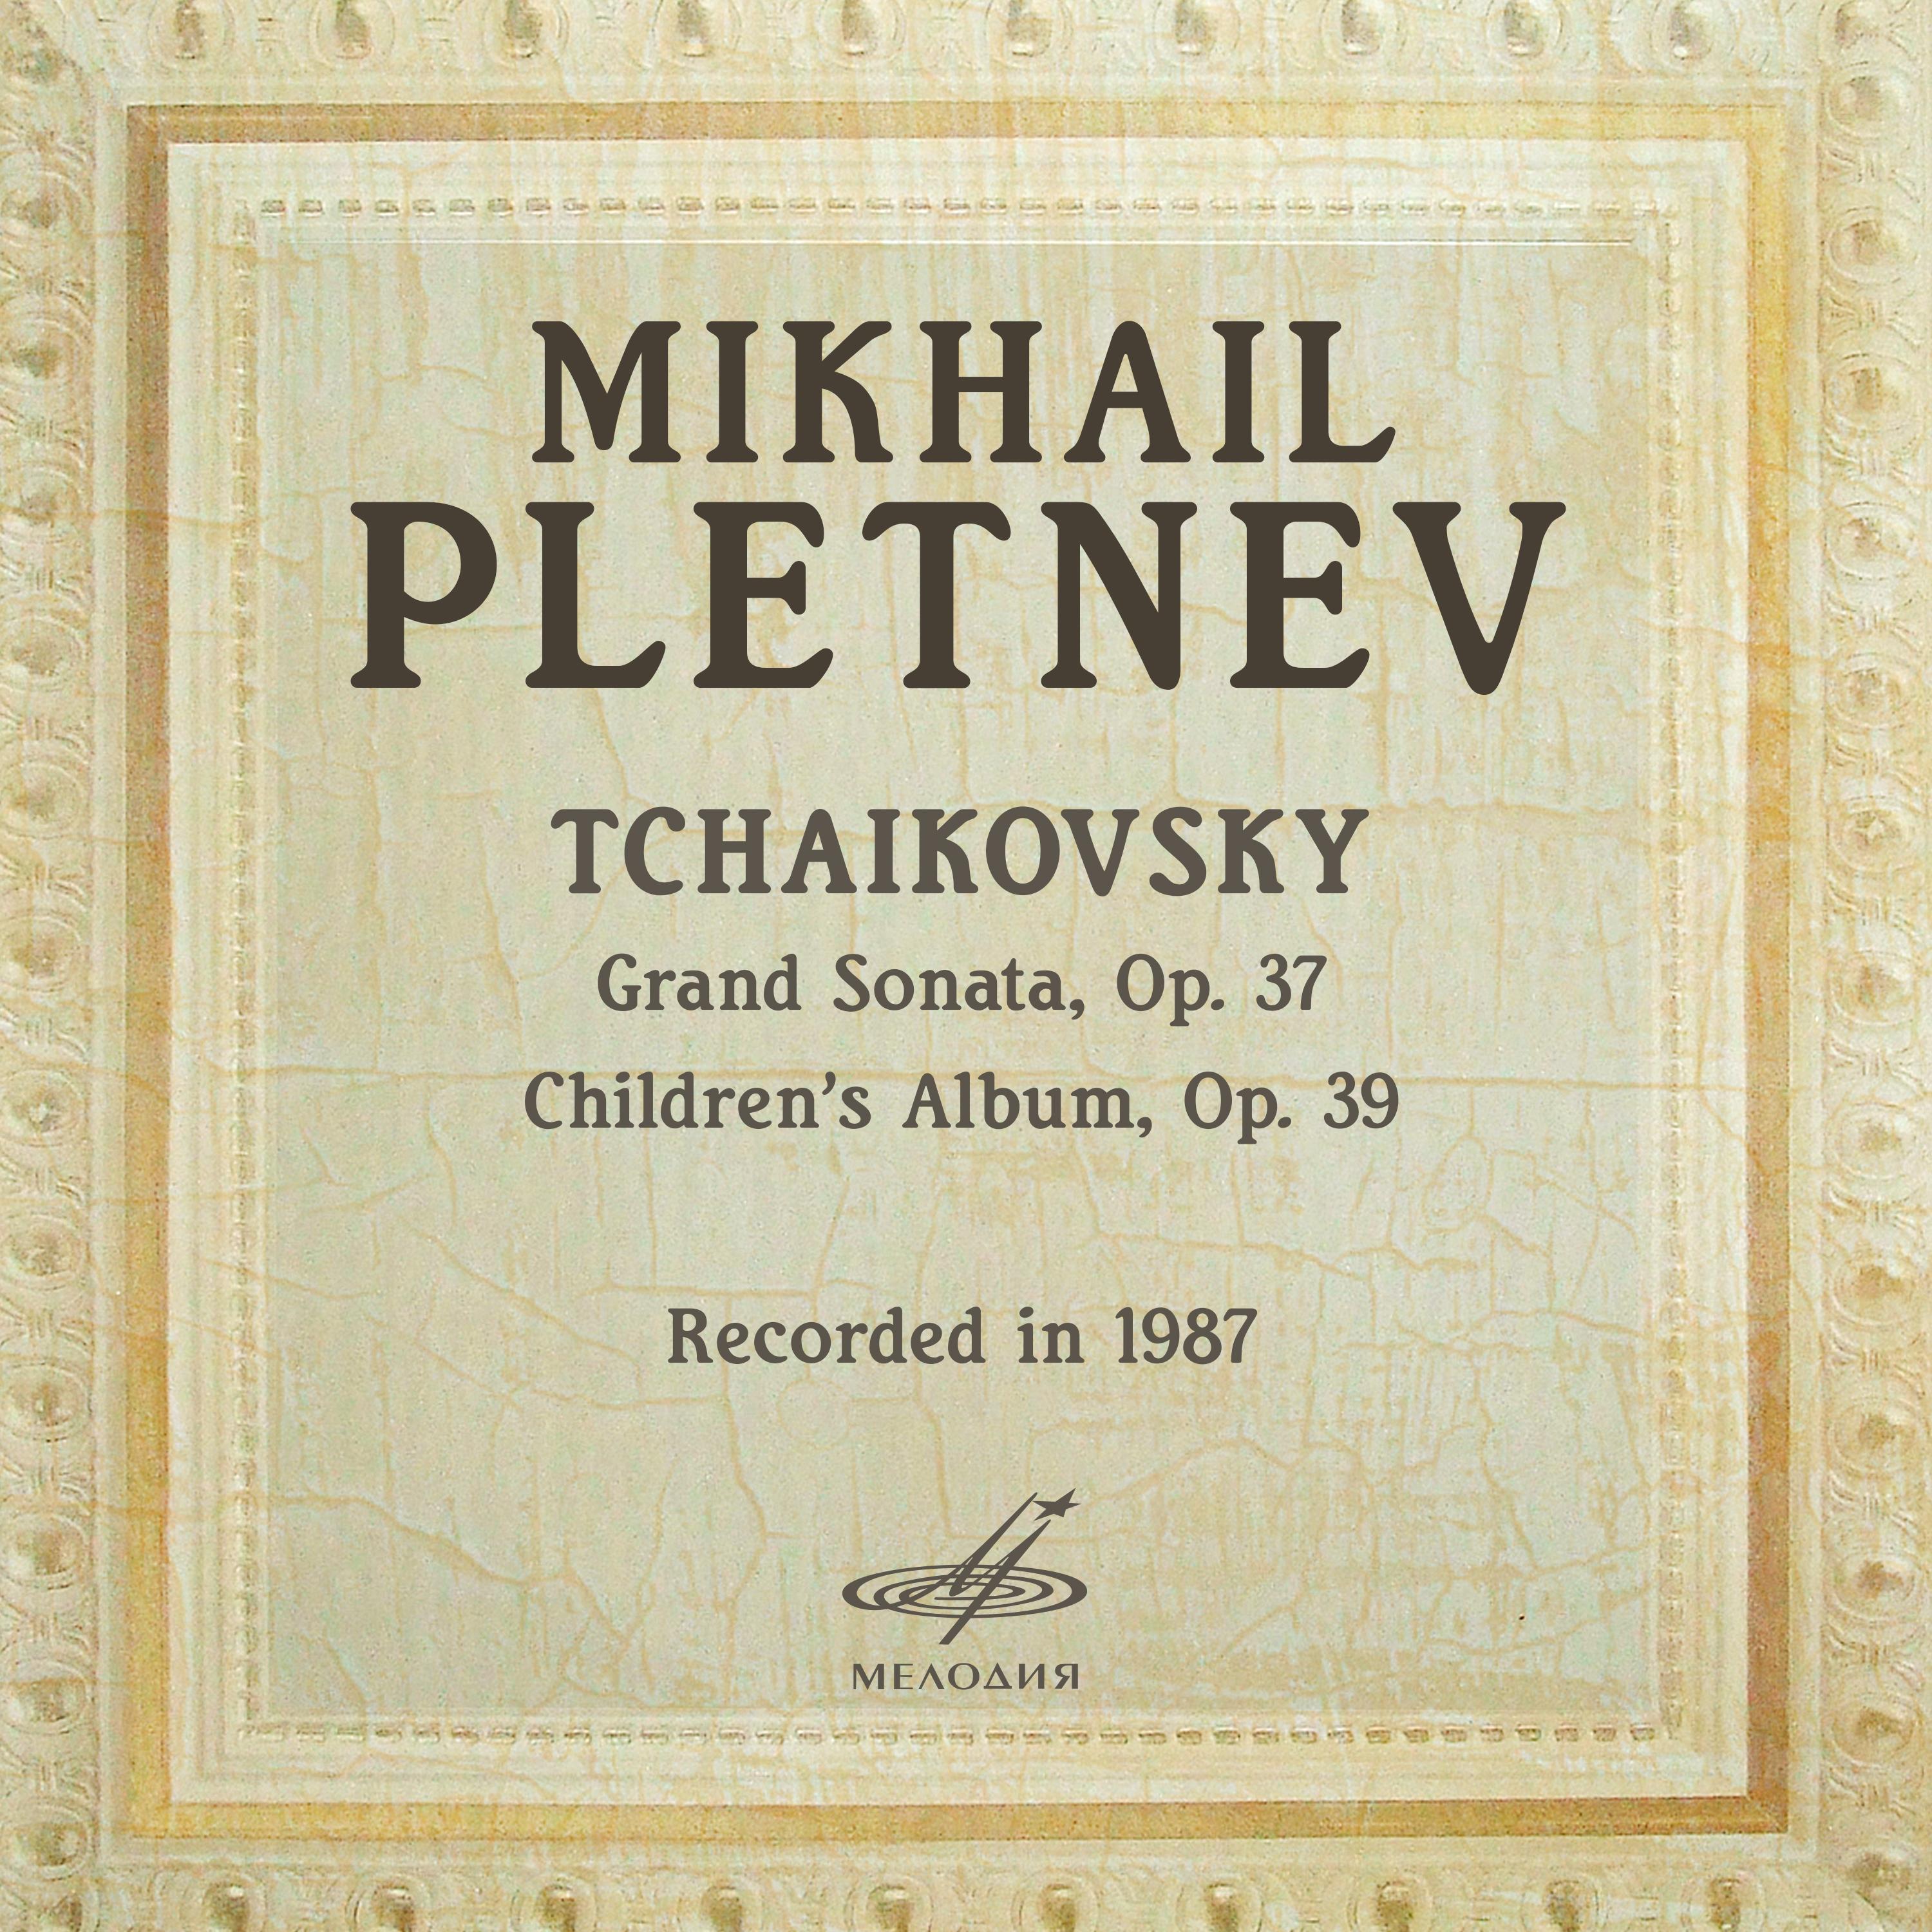 Pletnev Plays Tchaikovsky